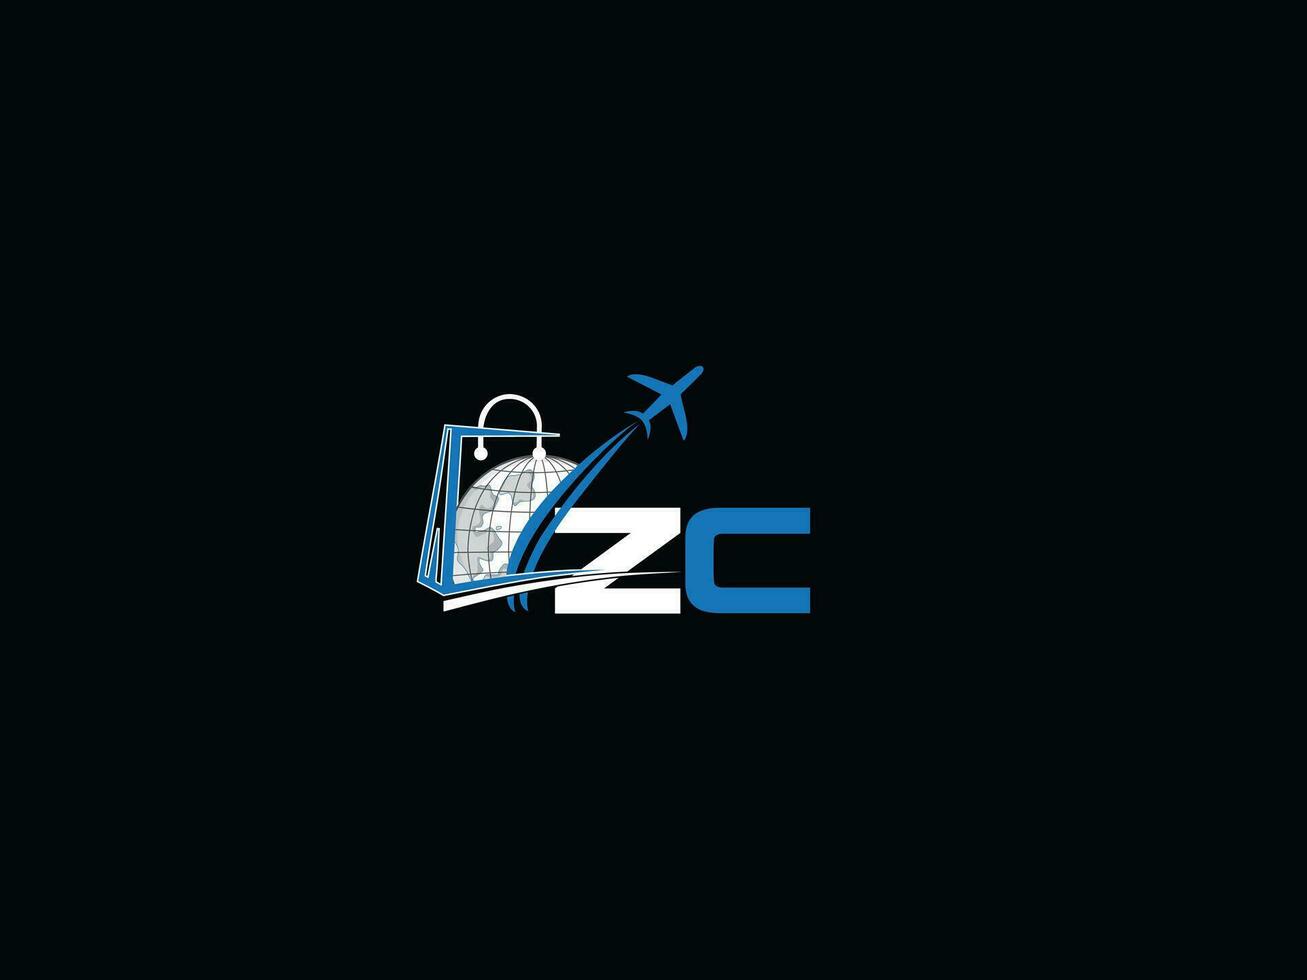 eerste zc logo symbool, premie lucht zc reizen logo icoon vector